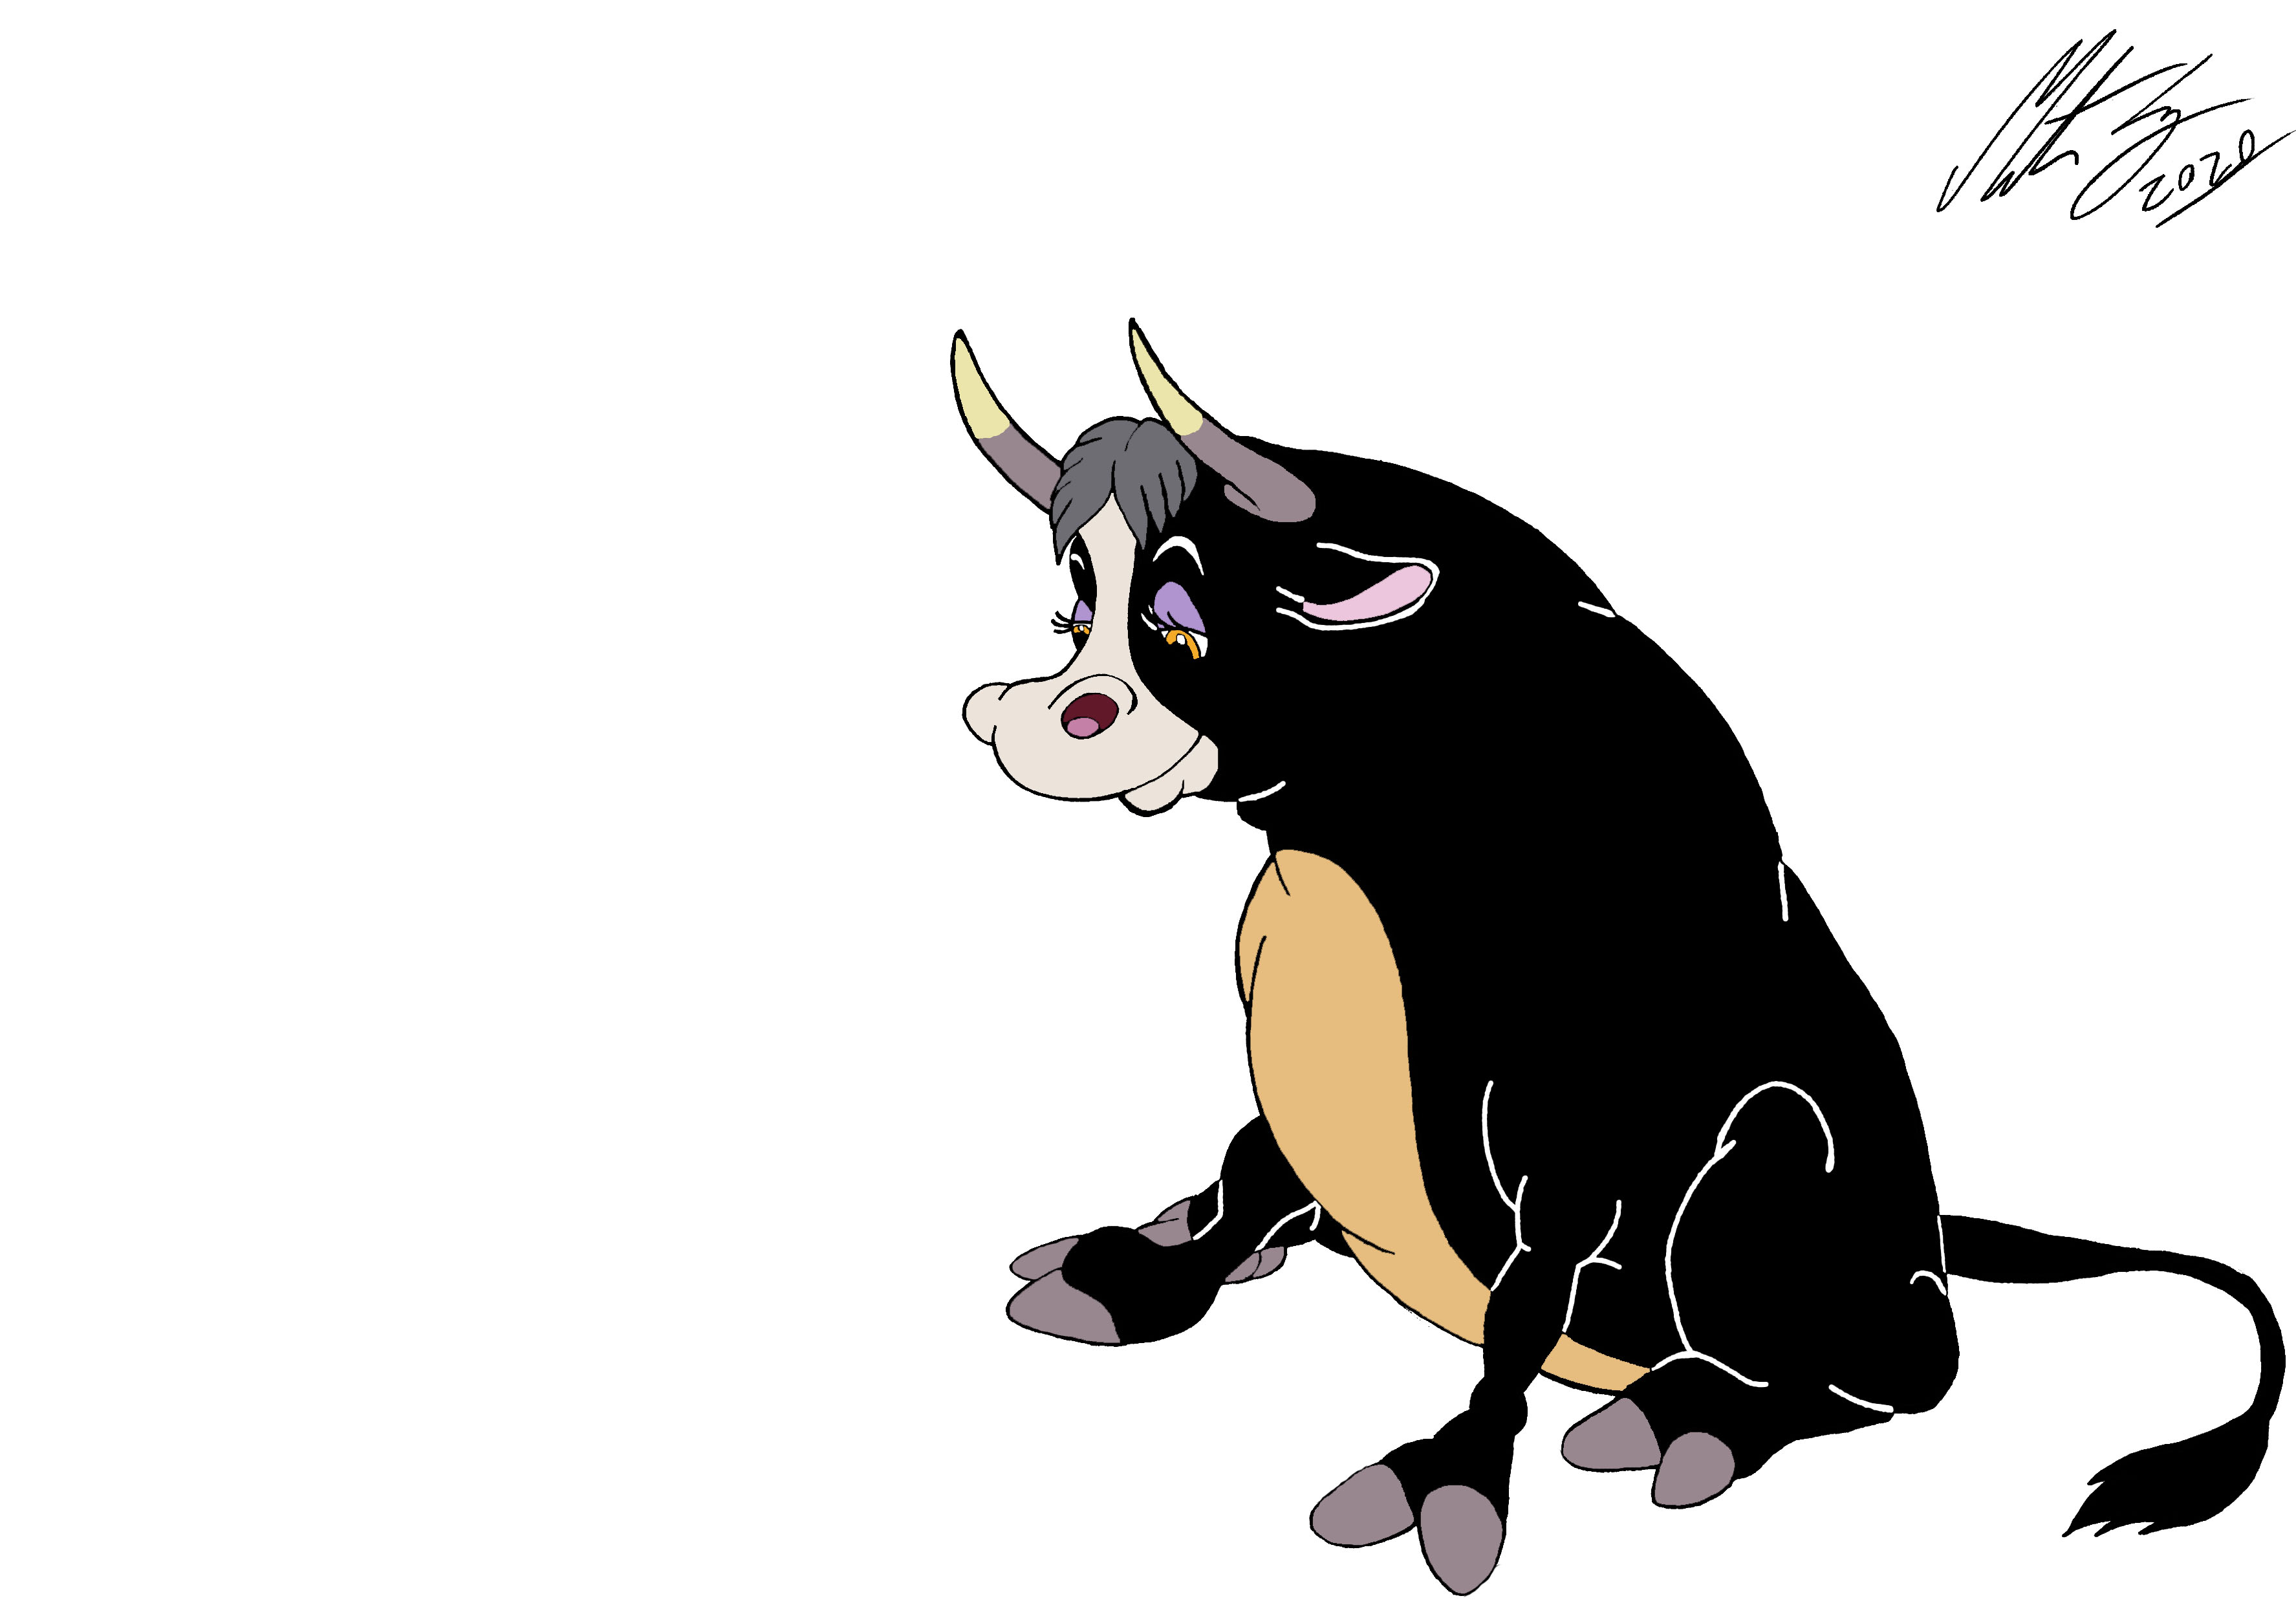 Disney - Ferdinand the Bull by MortenEng21 on DeviantArt